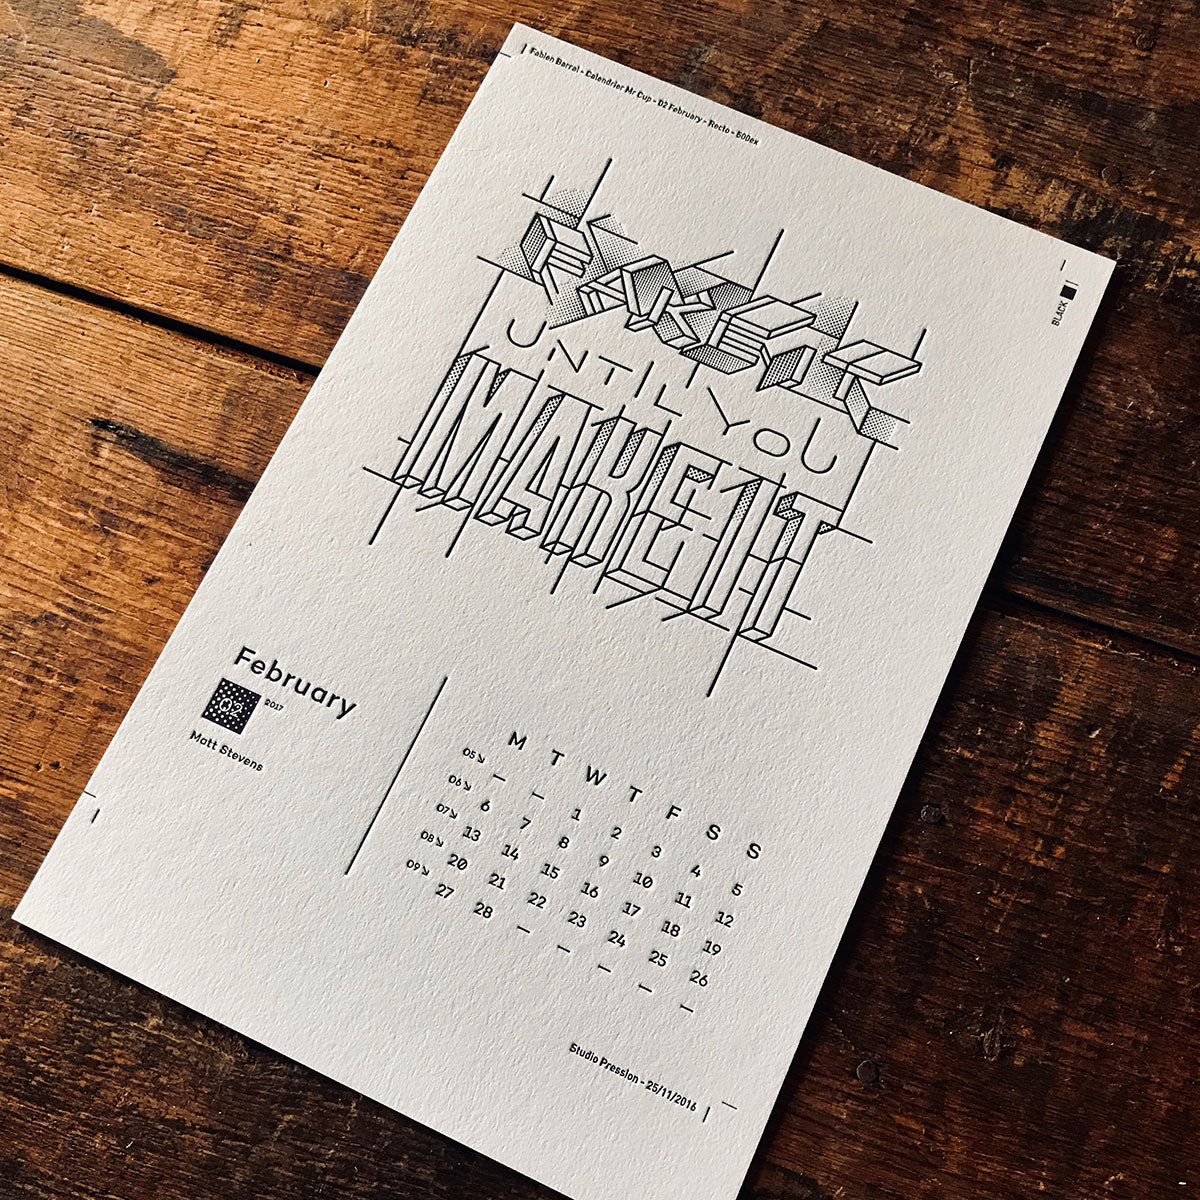 2017 letterpress calendar Artist's proof 02 - MR CUP